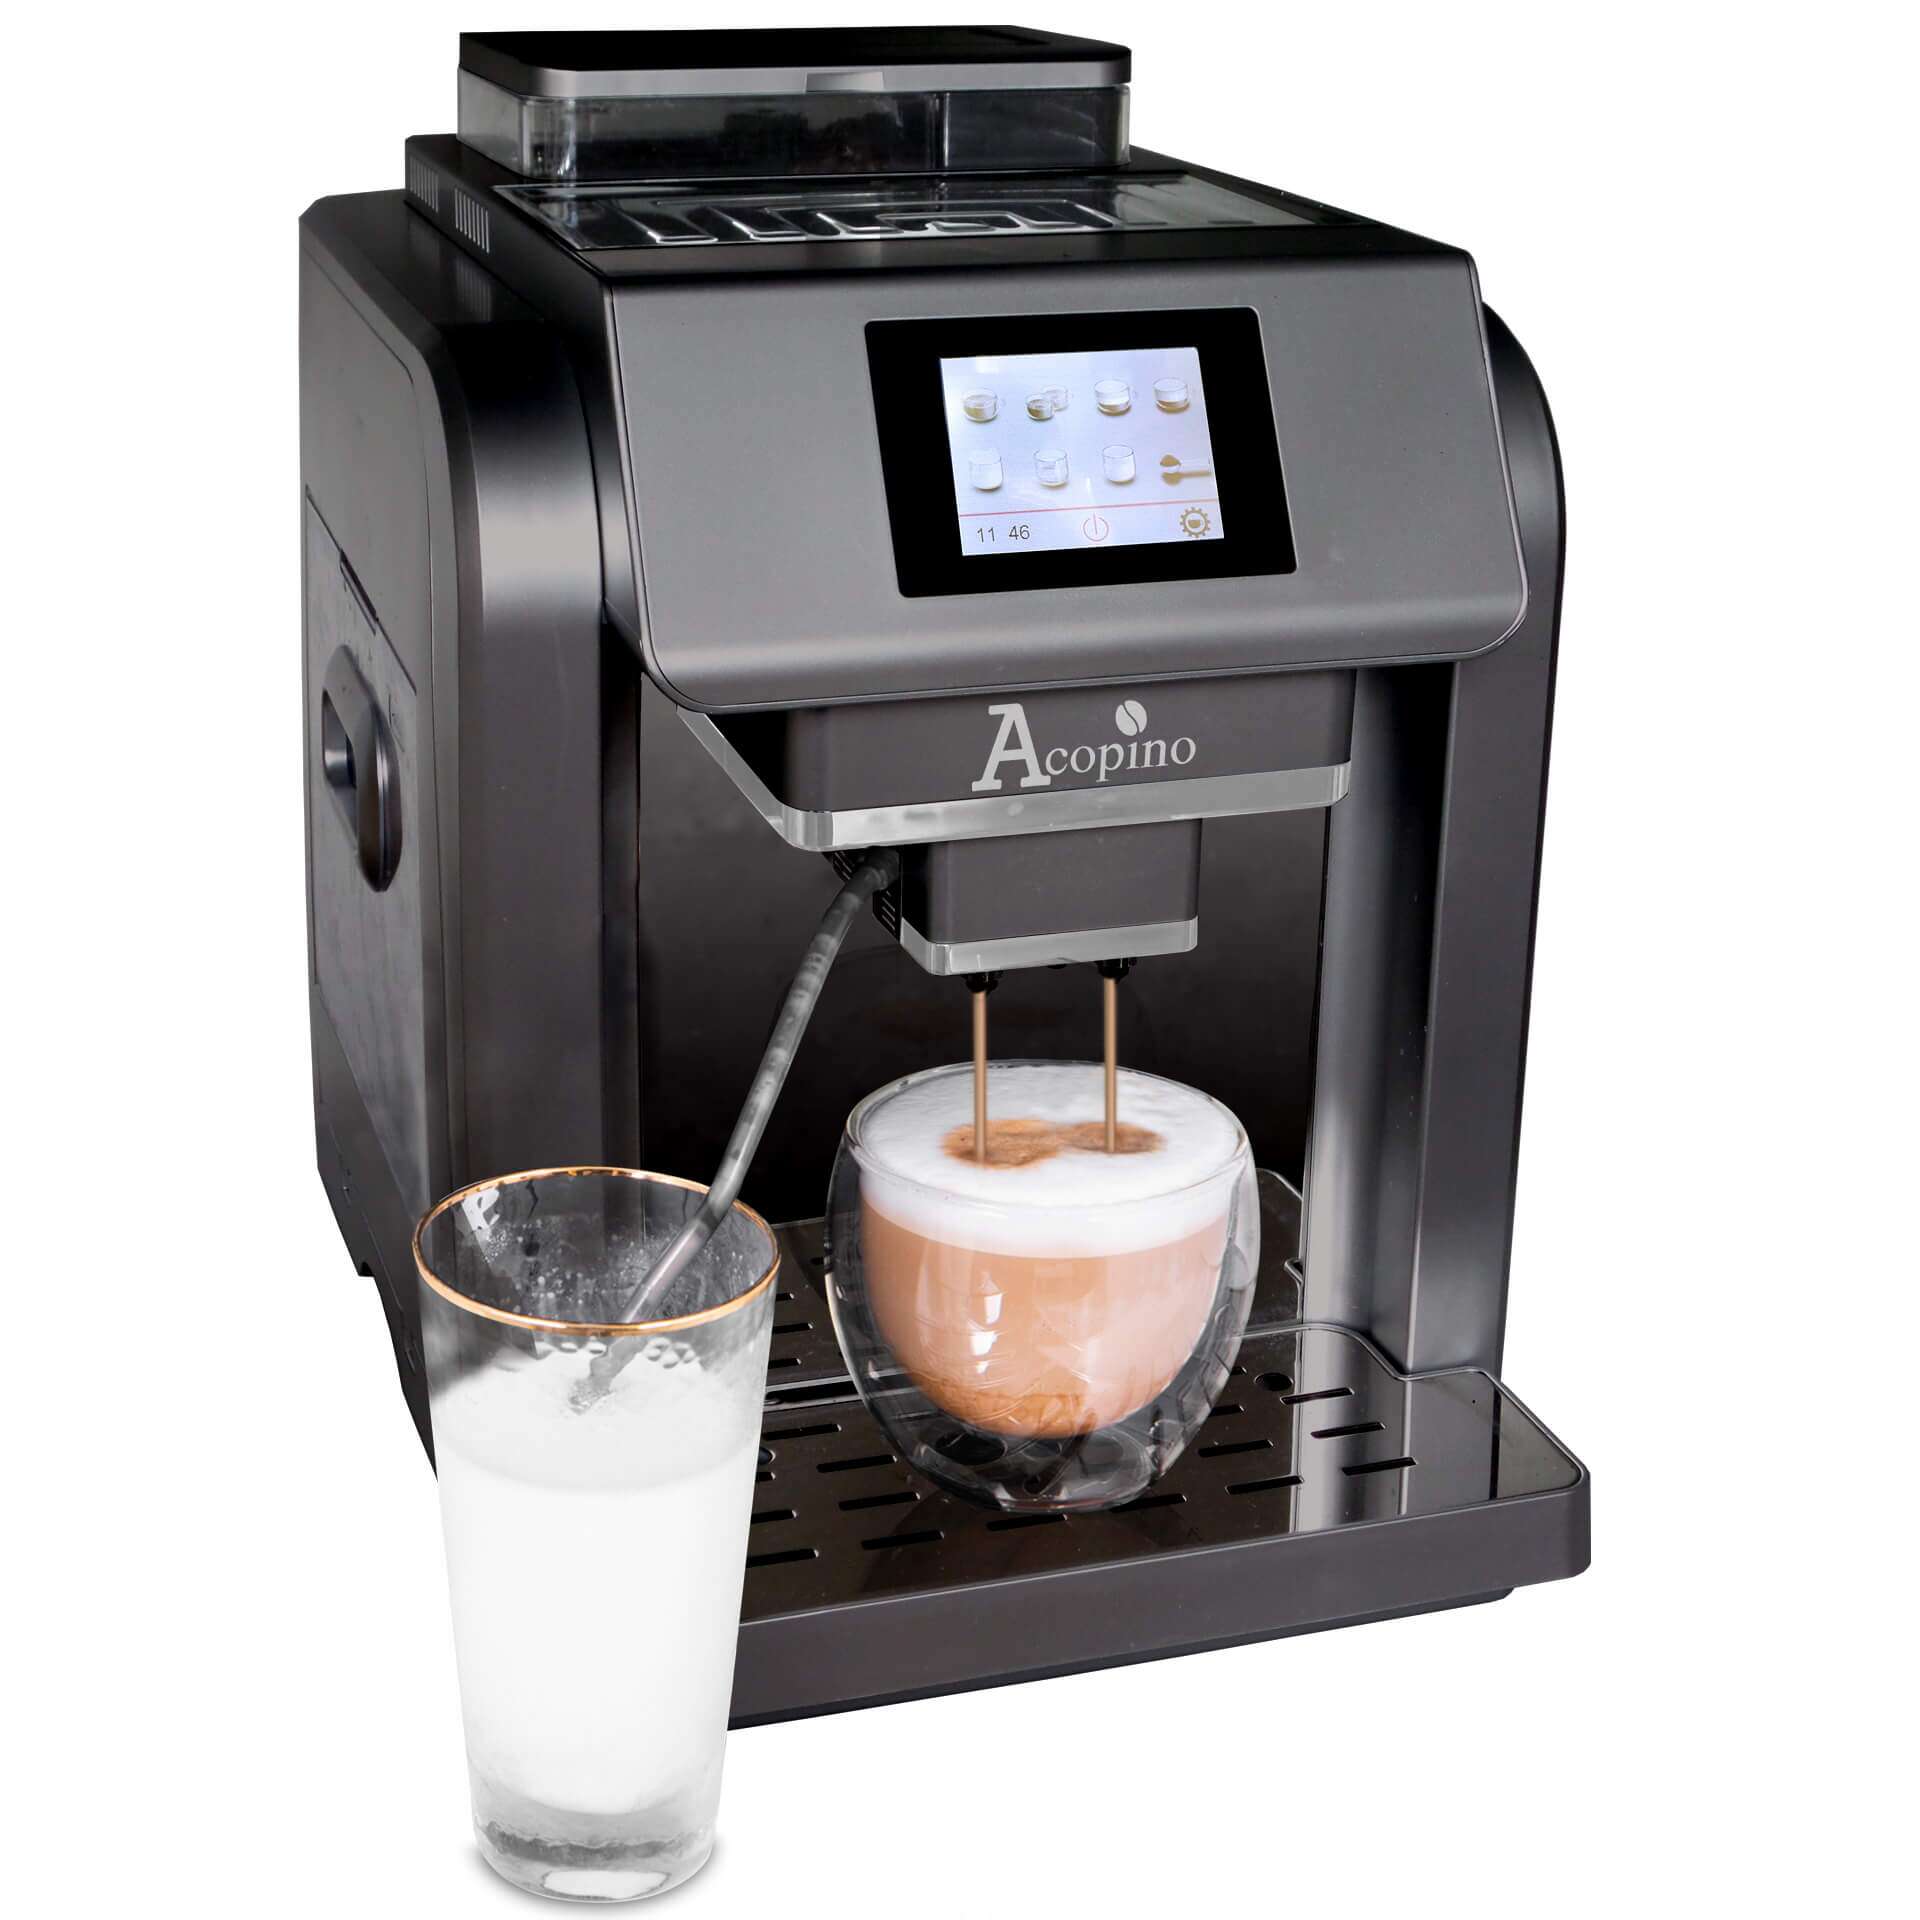 Acopino monza automata kávéfőző - szürke